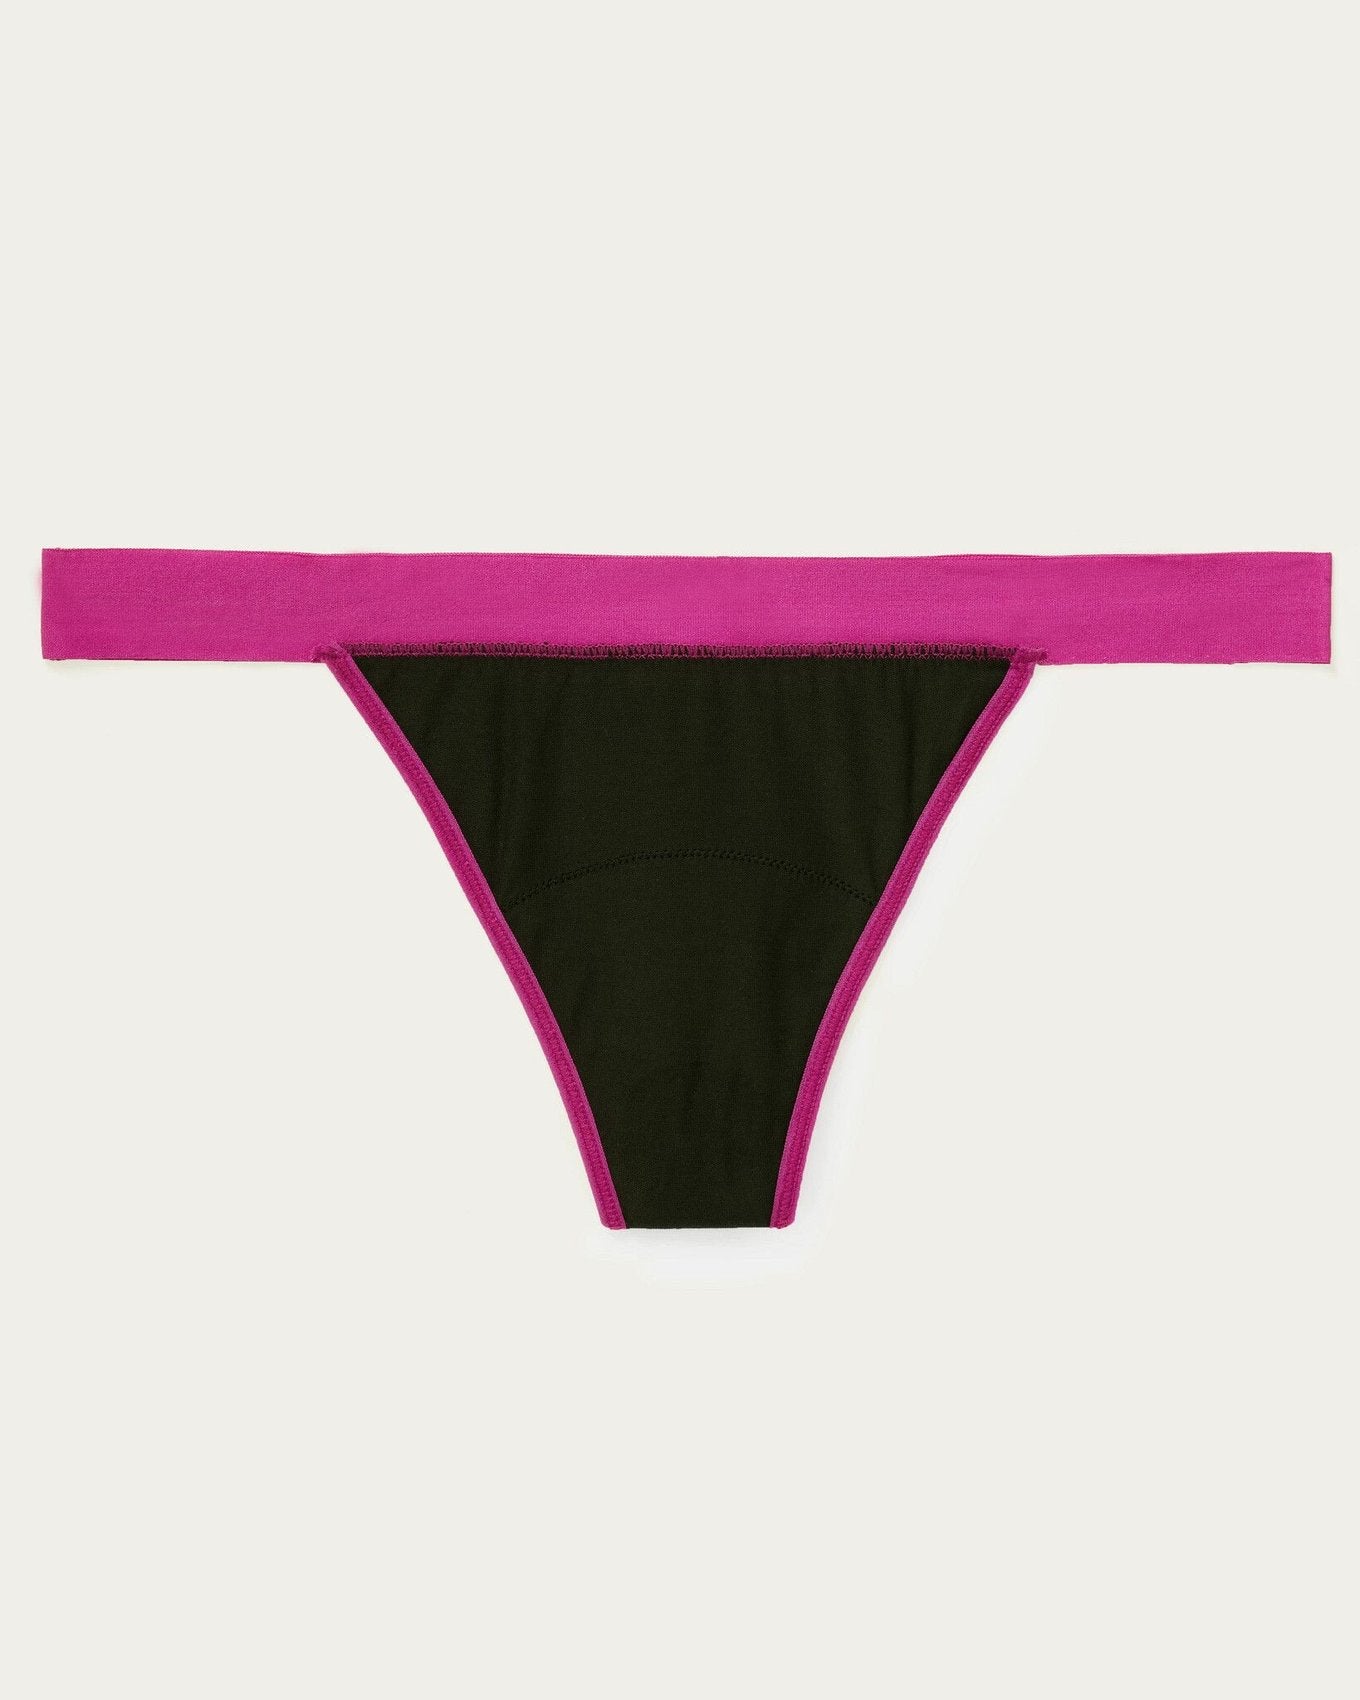 Joyja Leah period-proof panty in color Festival Fuchsia and shape thong